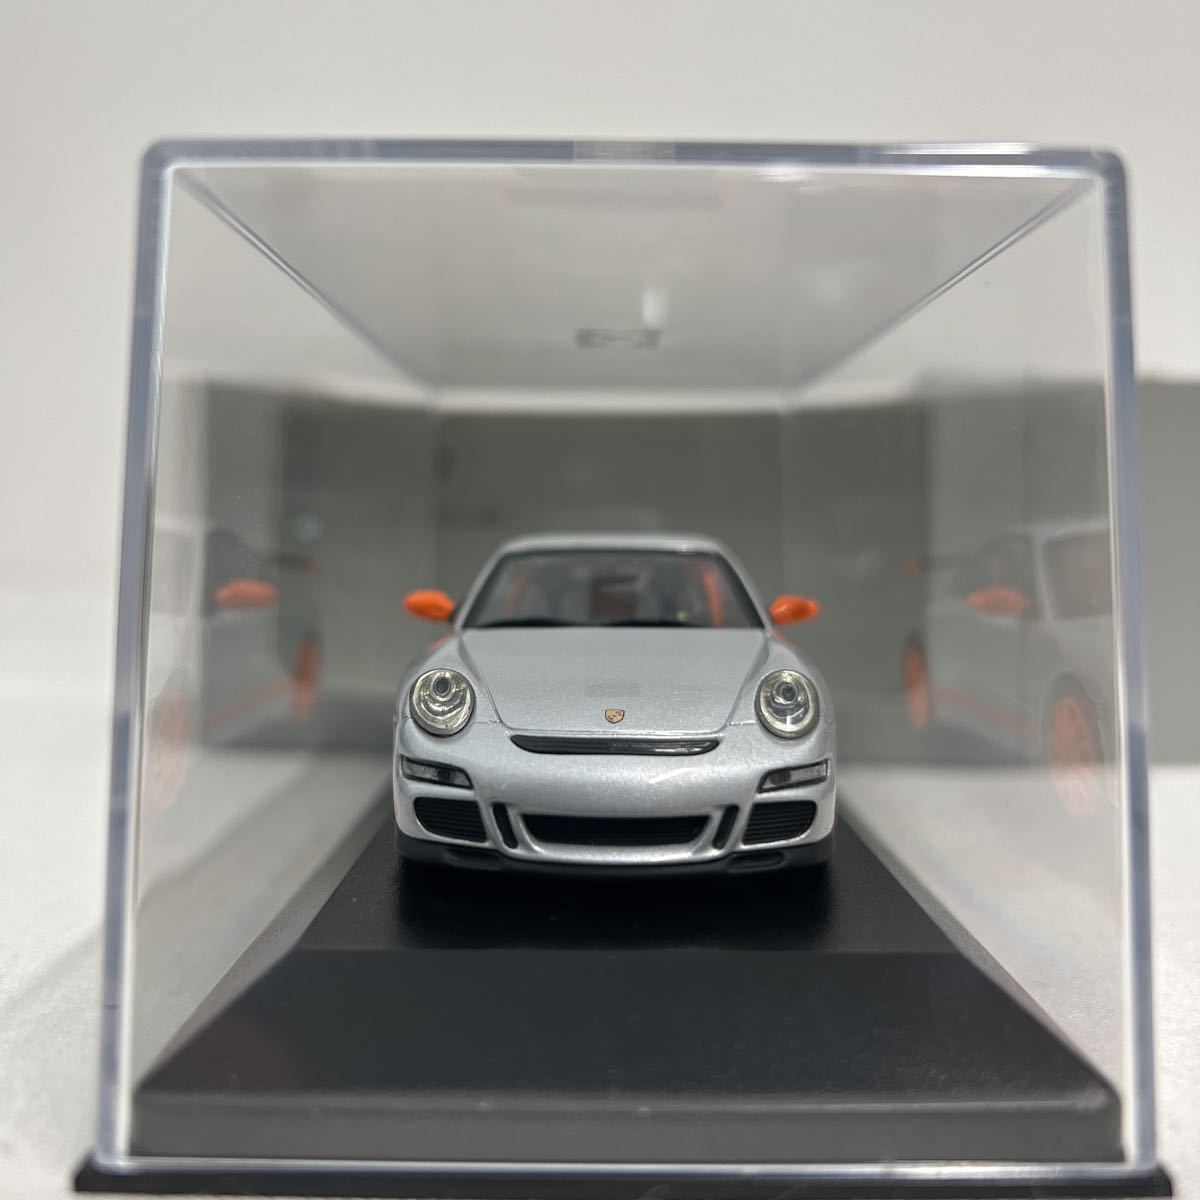 Porsche ディーラー特注 PMA 1/43 ポルシェ 911 GT3RS Silver MINICHAMPS ミニチャンプス 997 限定車 ミニカー モデルカー_画像6